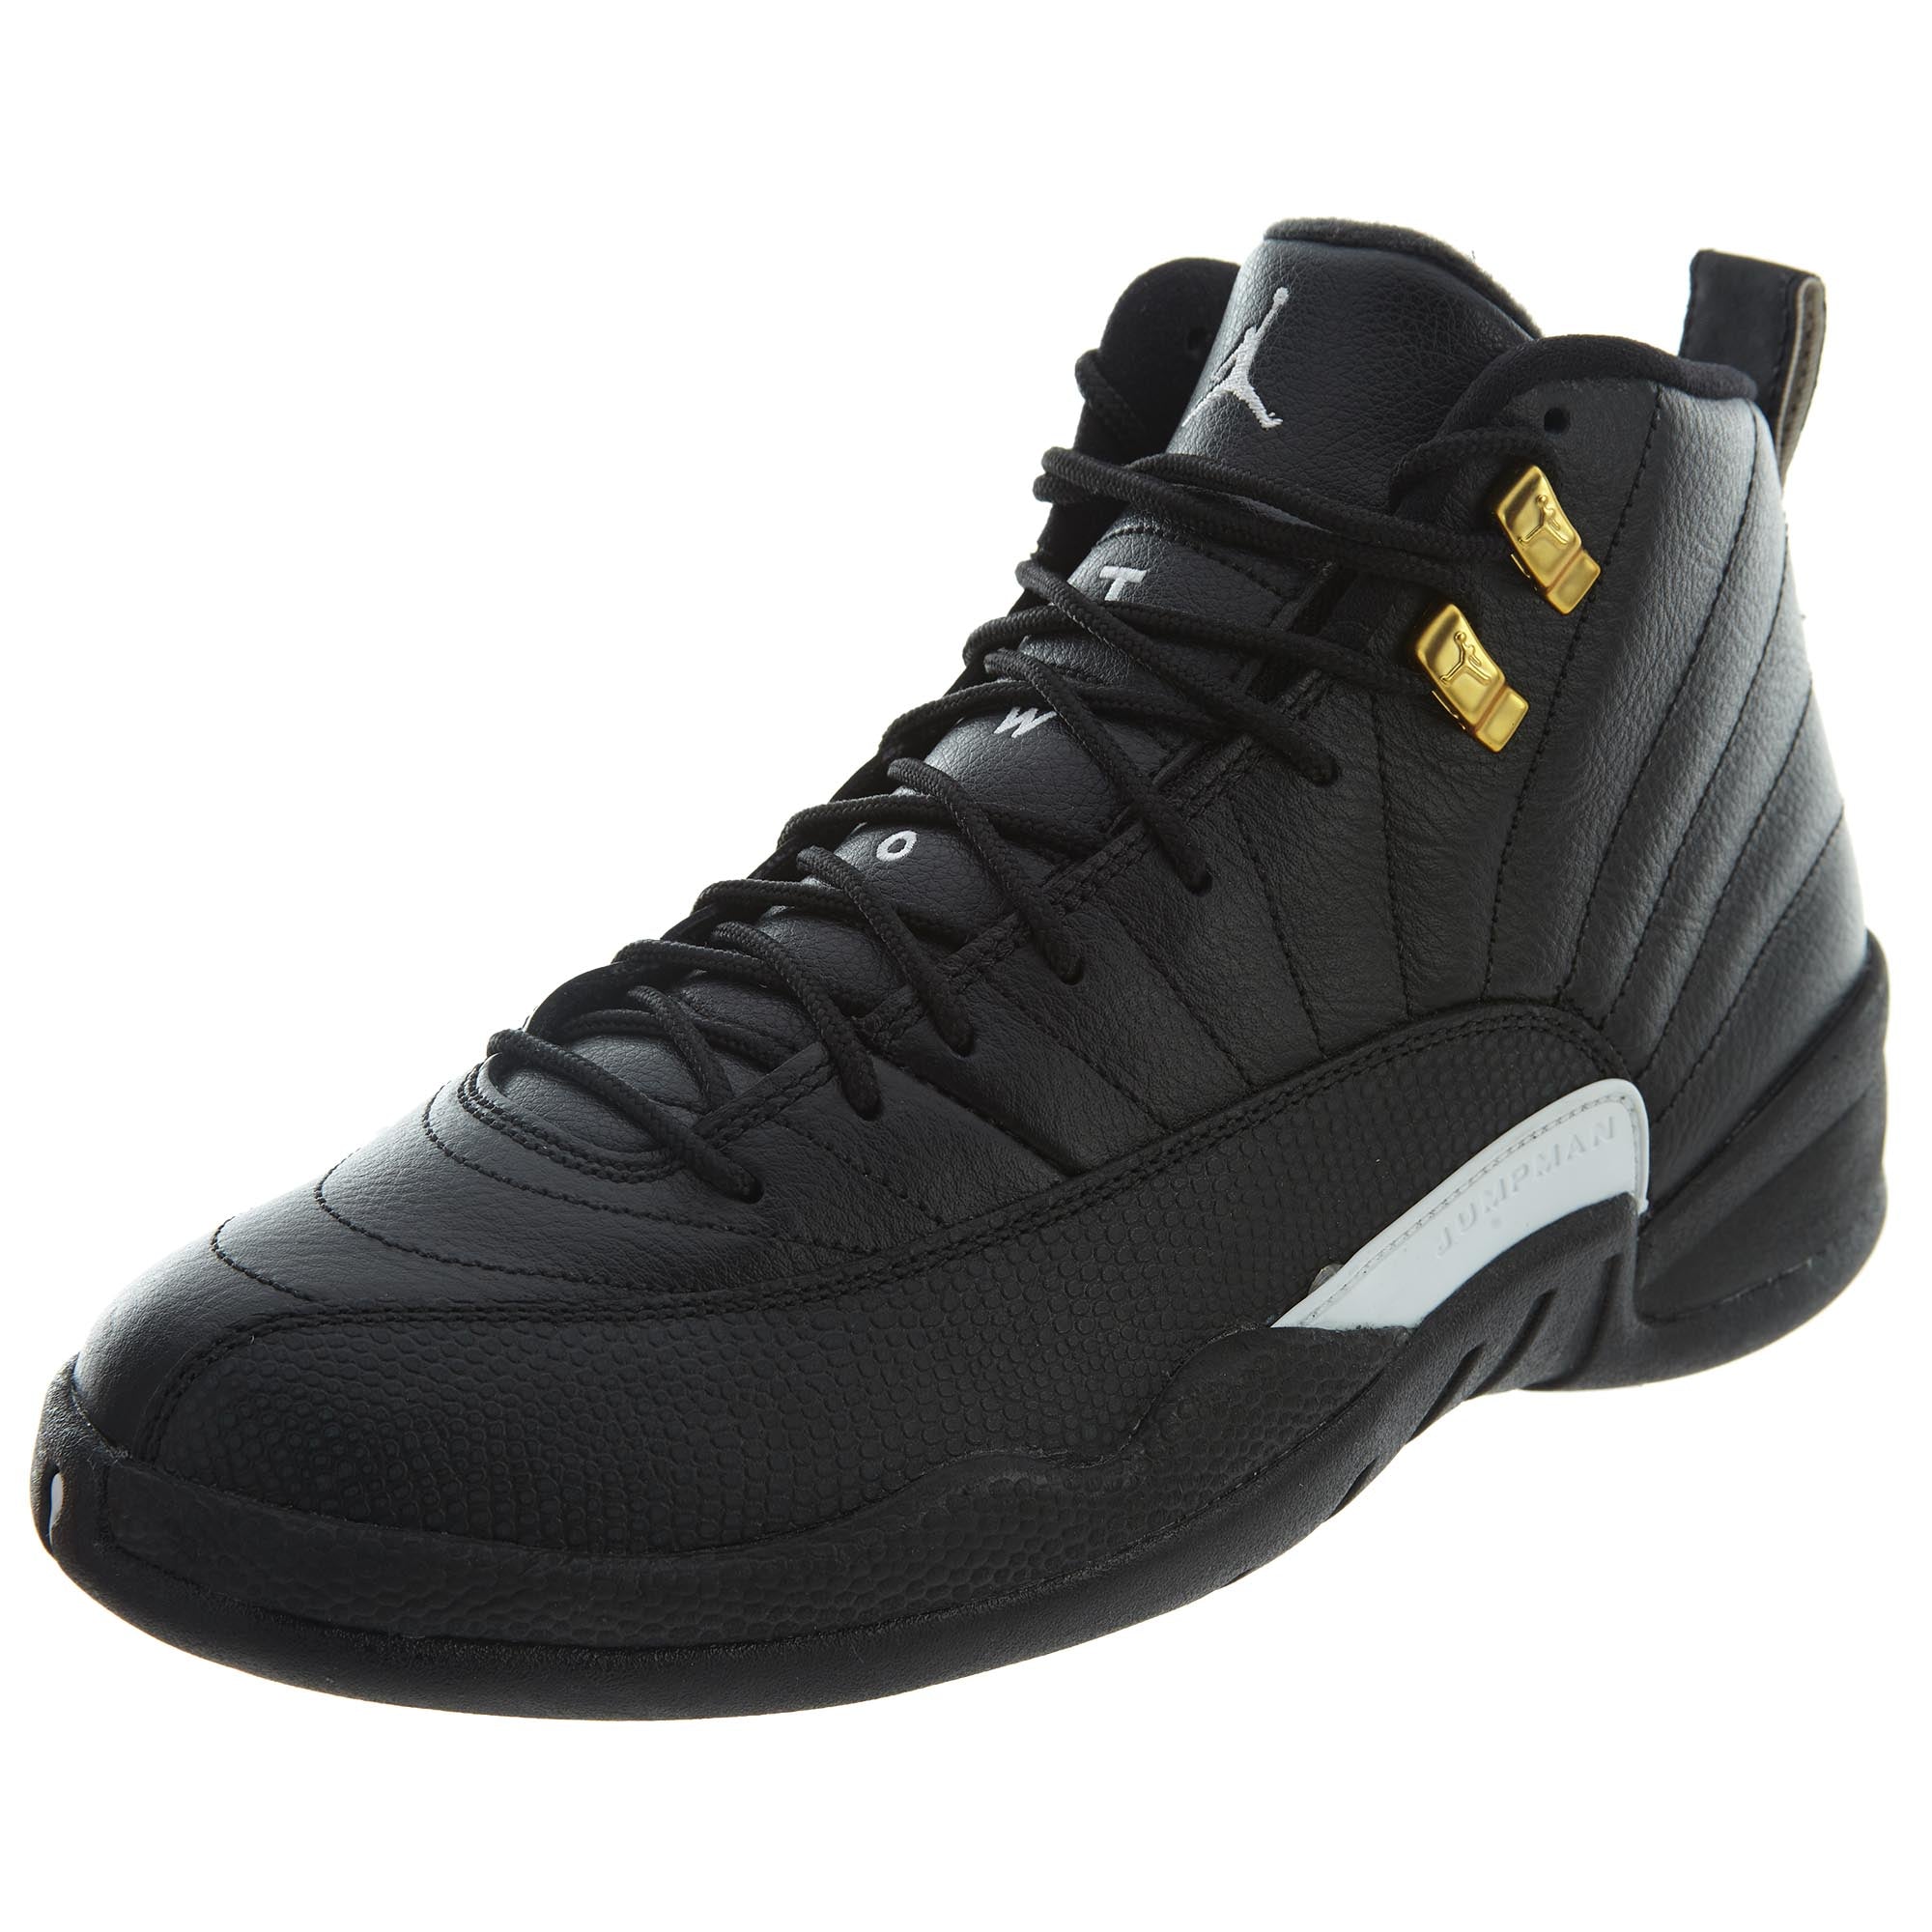 Air Jordan 12 Retro Black/Gold Basketball Shoes Men's Style #130690-013